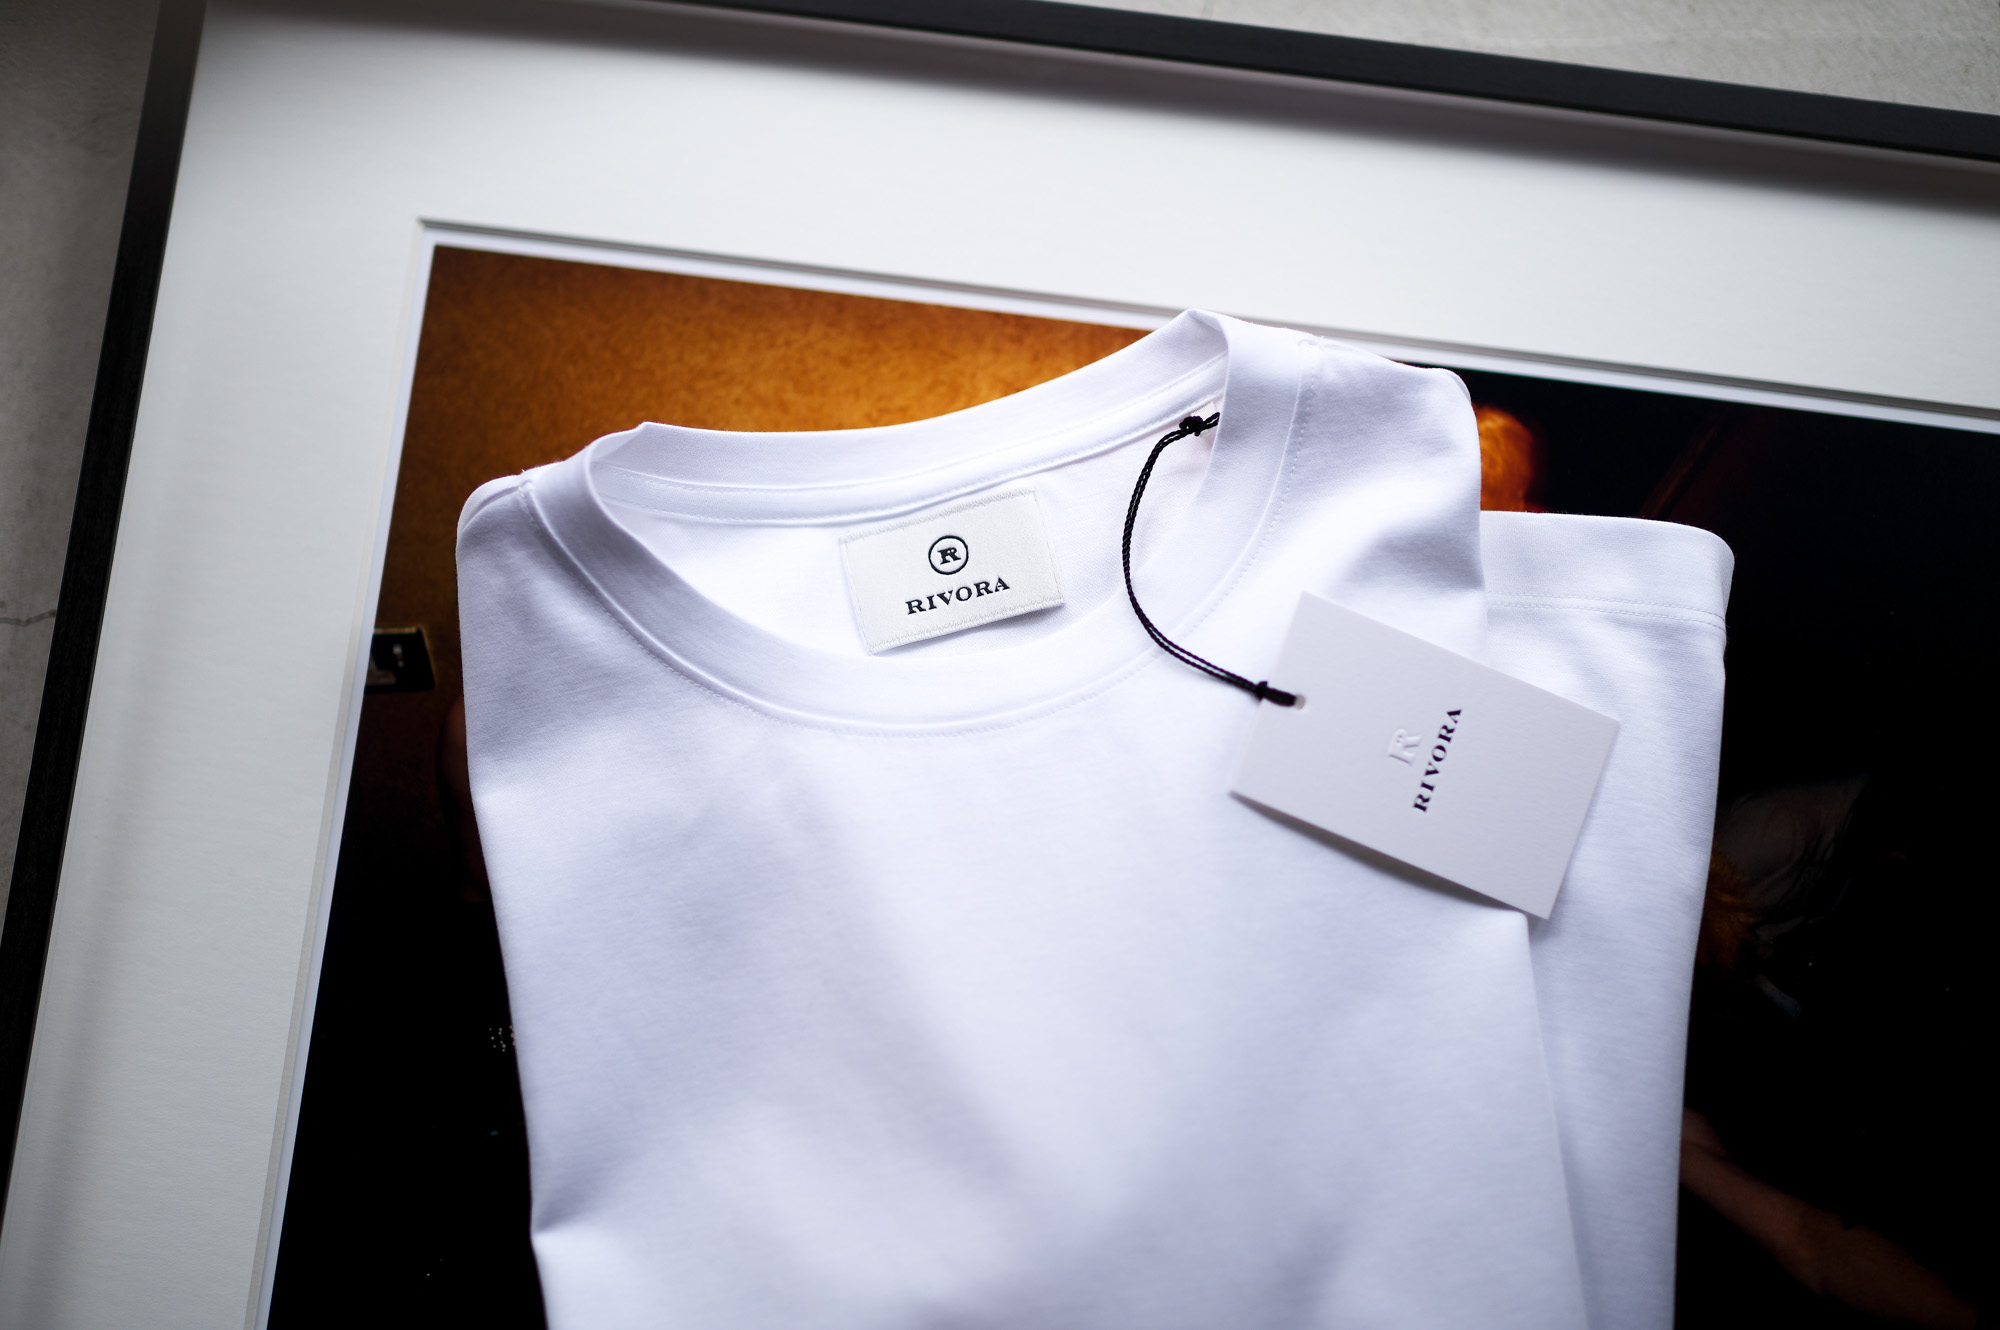 RIVORA (リヴォラ) Extra Fine Cotton T-Shirts エクストラファインコットン Tシャツ WHITE (ホワイト・030) MADE IN JAPAN (日本製) 2023春夏新作 愛知 名古屋 Alto e Diritto altoediritto アルトエデリット